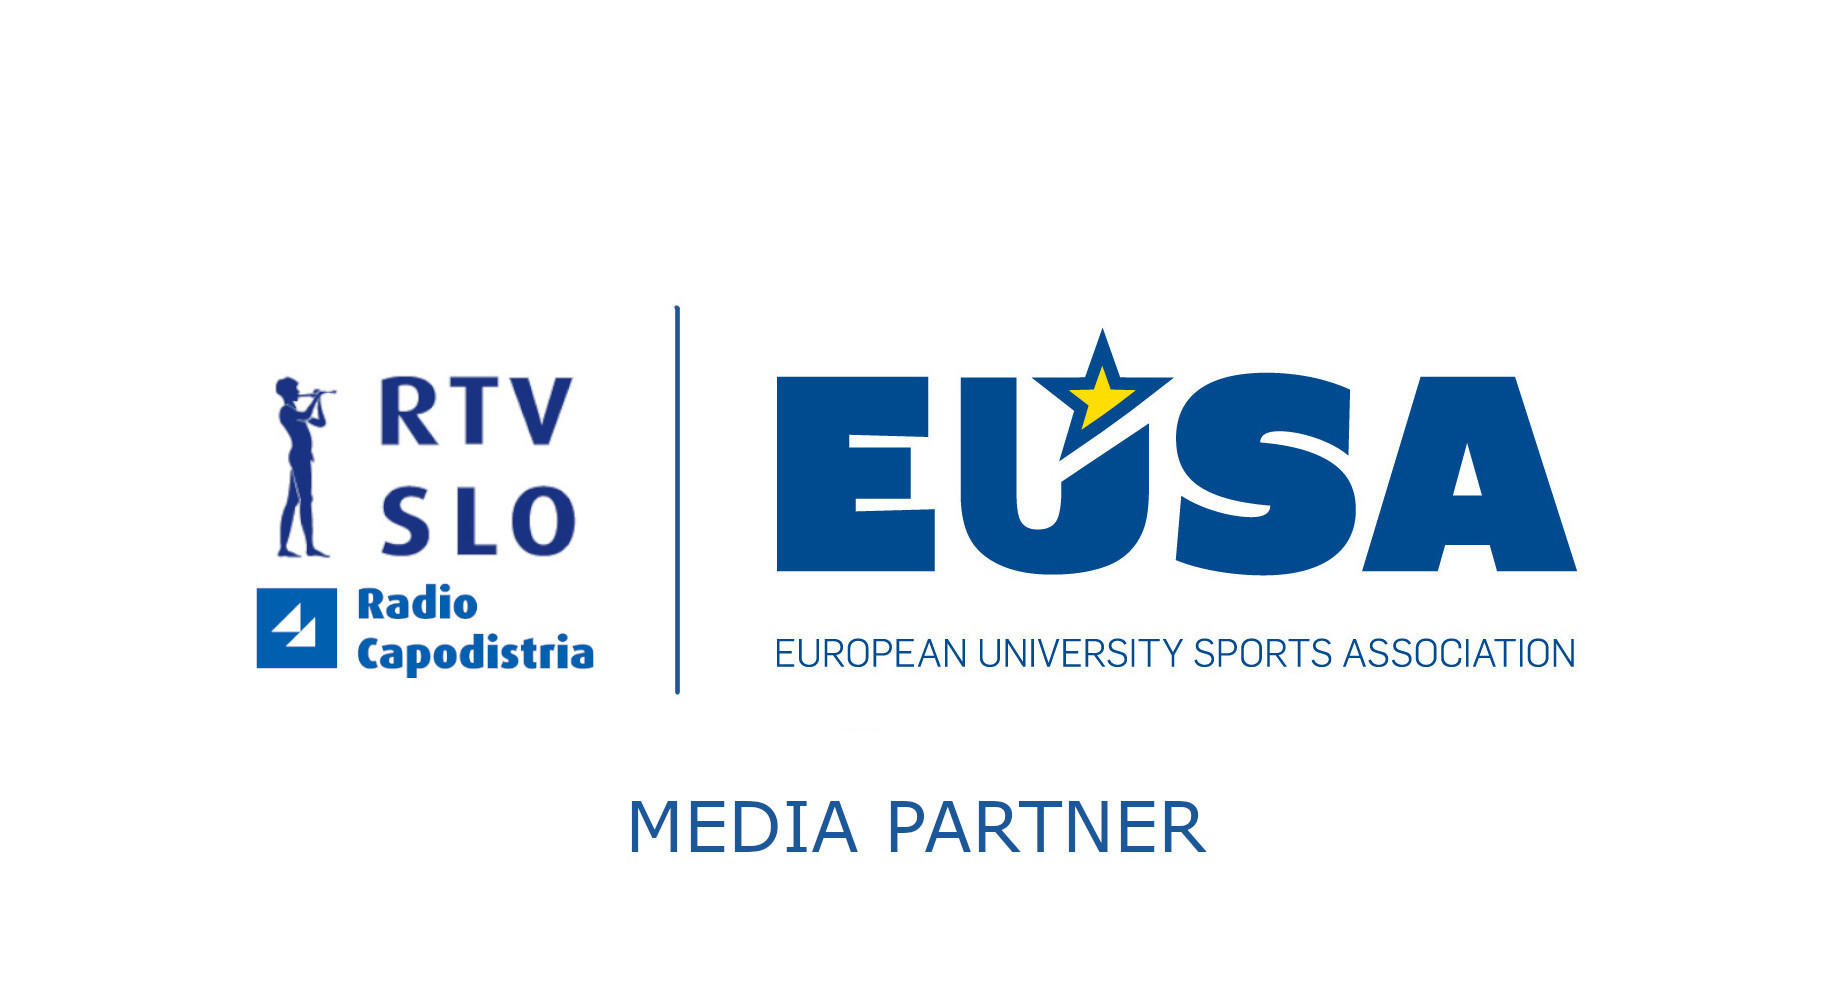 EUSA news will continue to be broadcast on Radio Capodistria ©EUSA